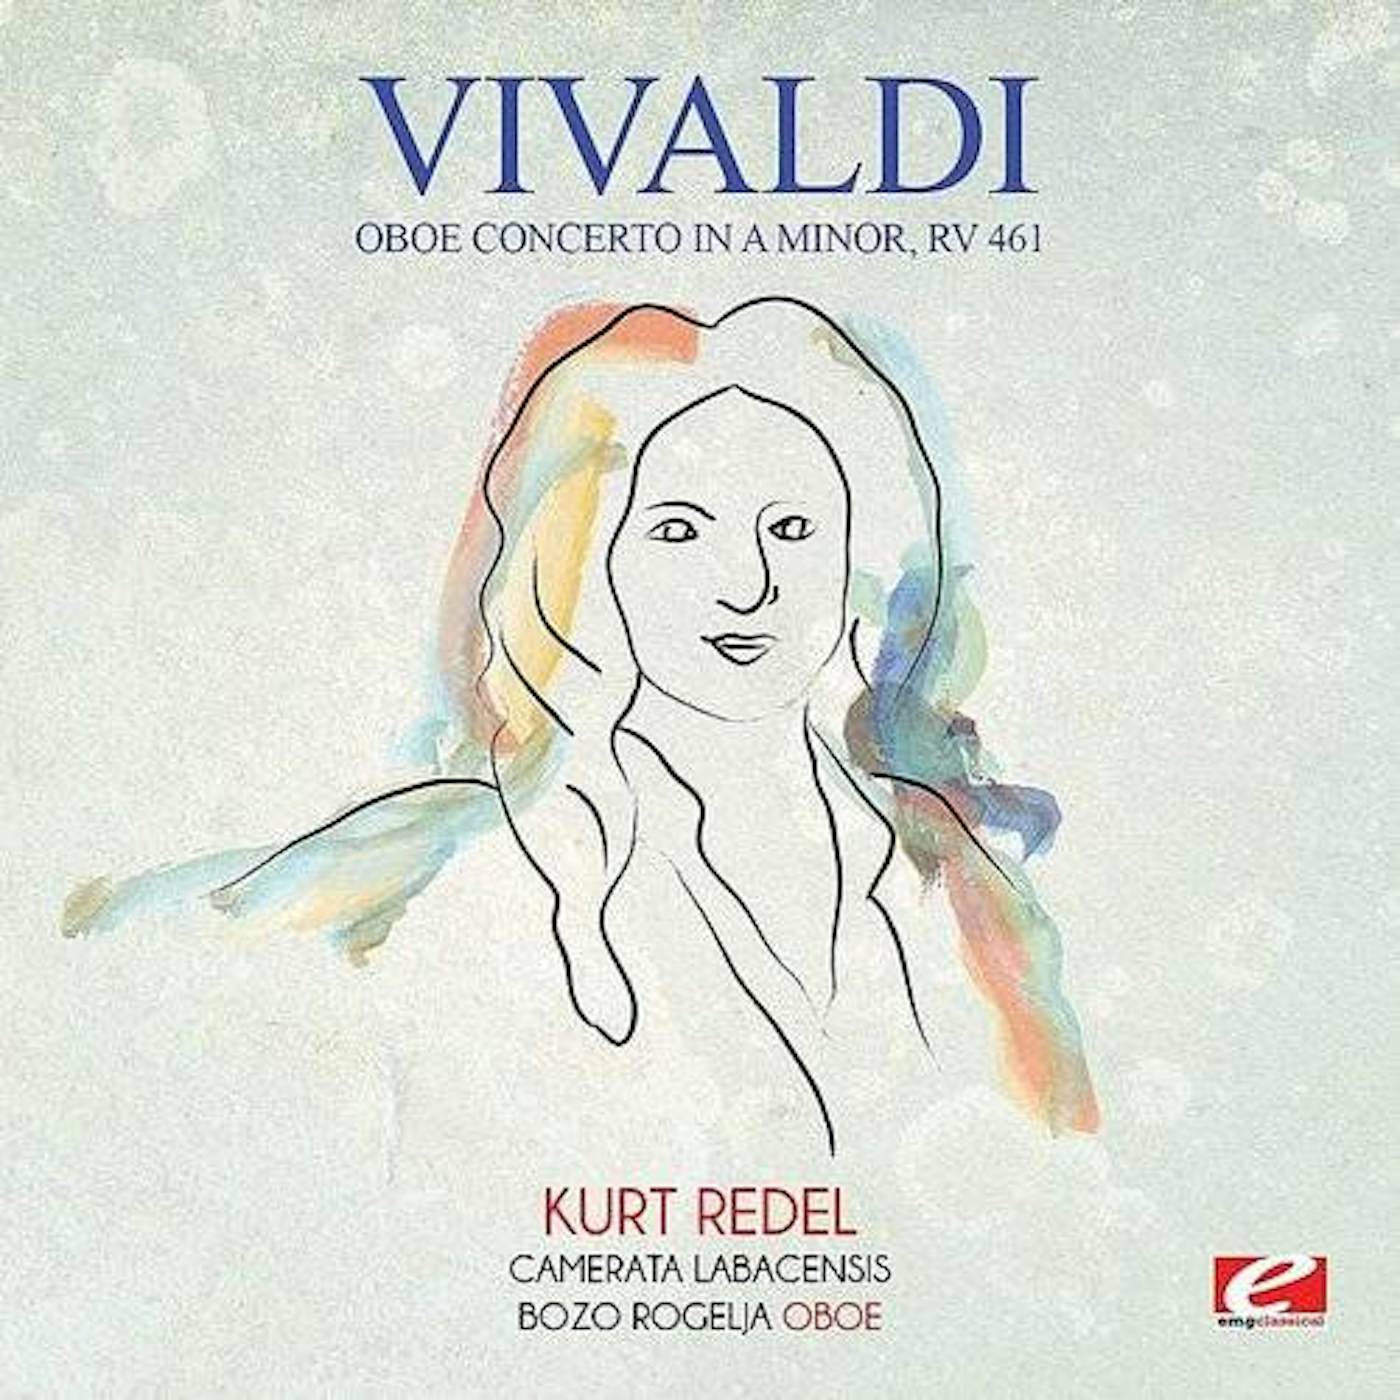 Antonio Vivaldi OBOE CONCERTO IN A MINOR RV 461 CD